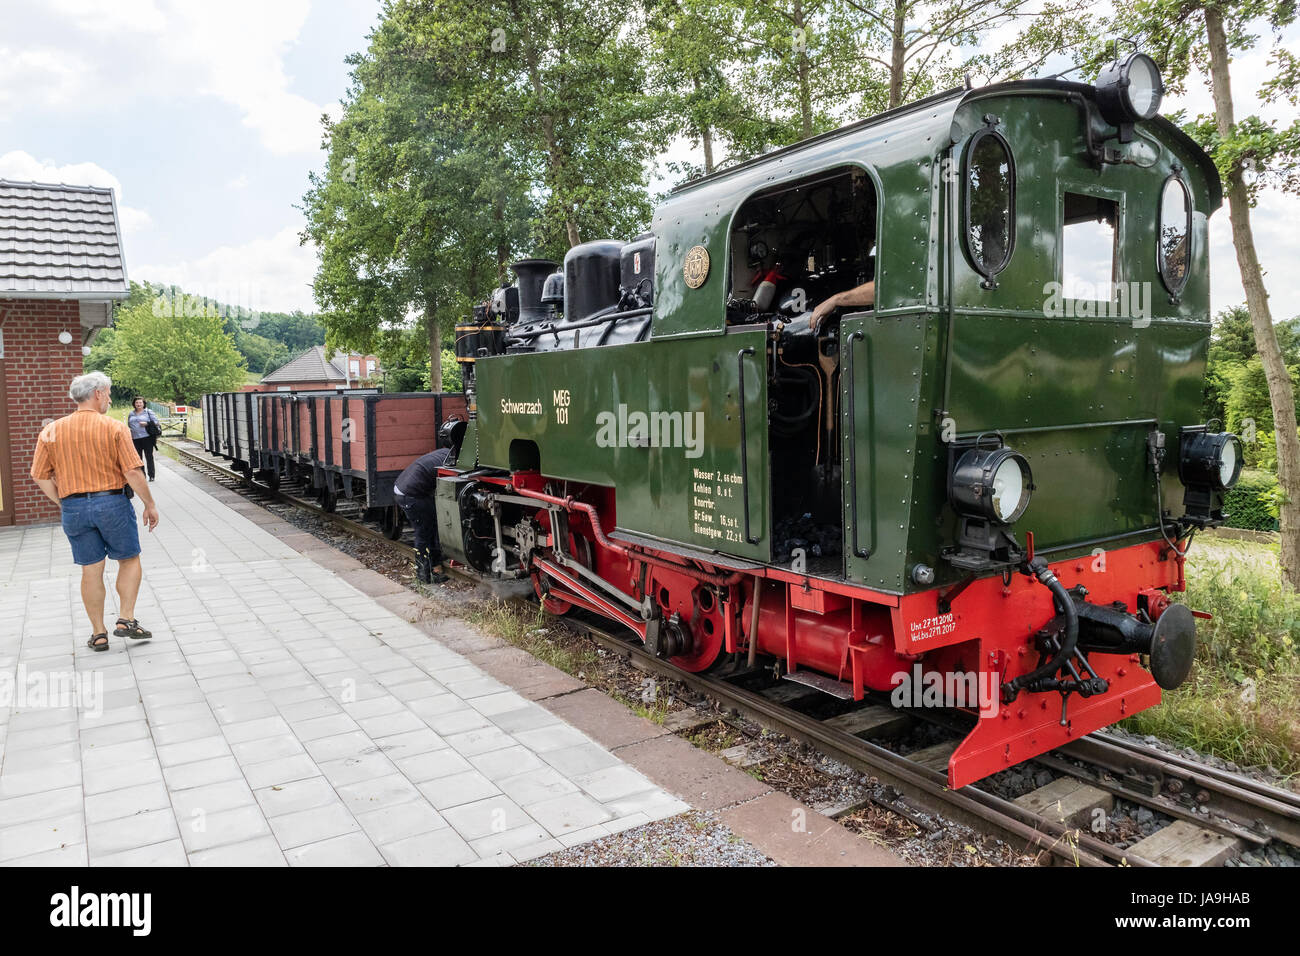 Train à vapeur historique - 4 juin 2017 - Schierwaldenrath, Gangelt, Selfkant, North Rhine Westphalia, NRW, Germany, Europe Banque D'Images